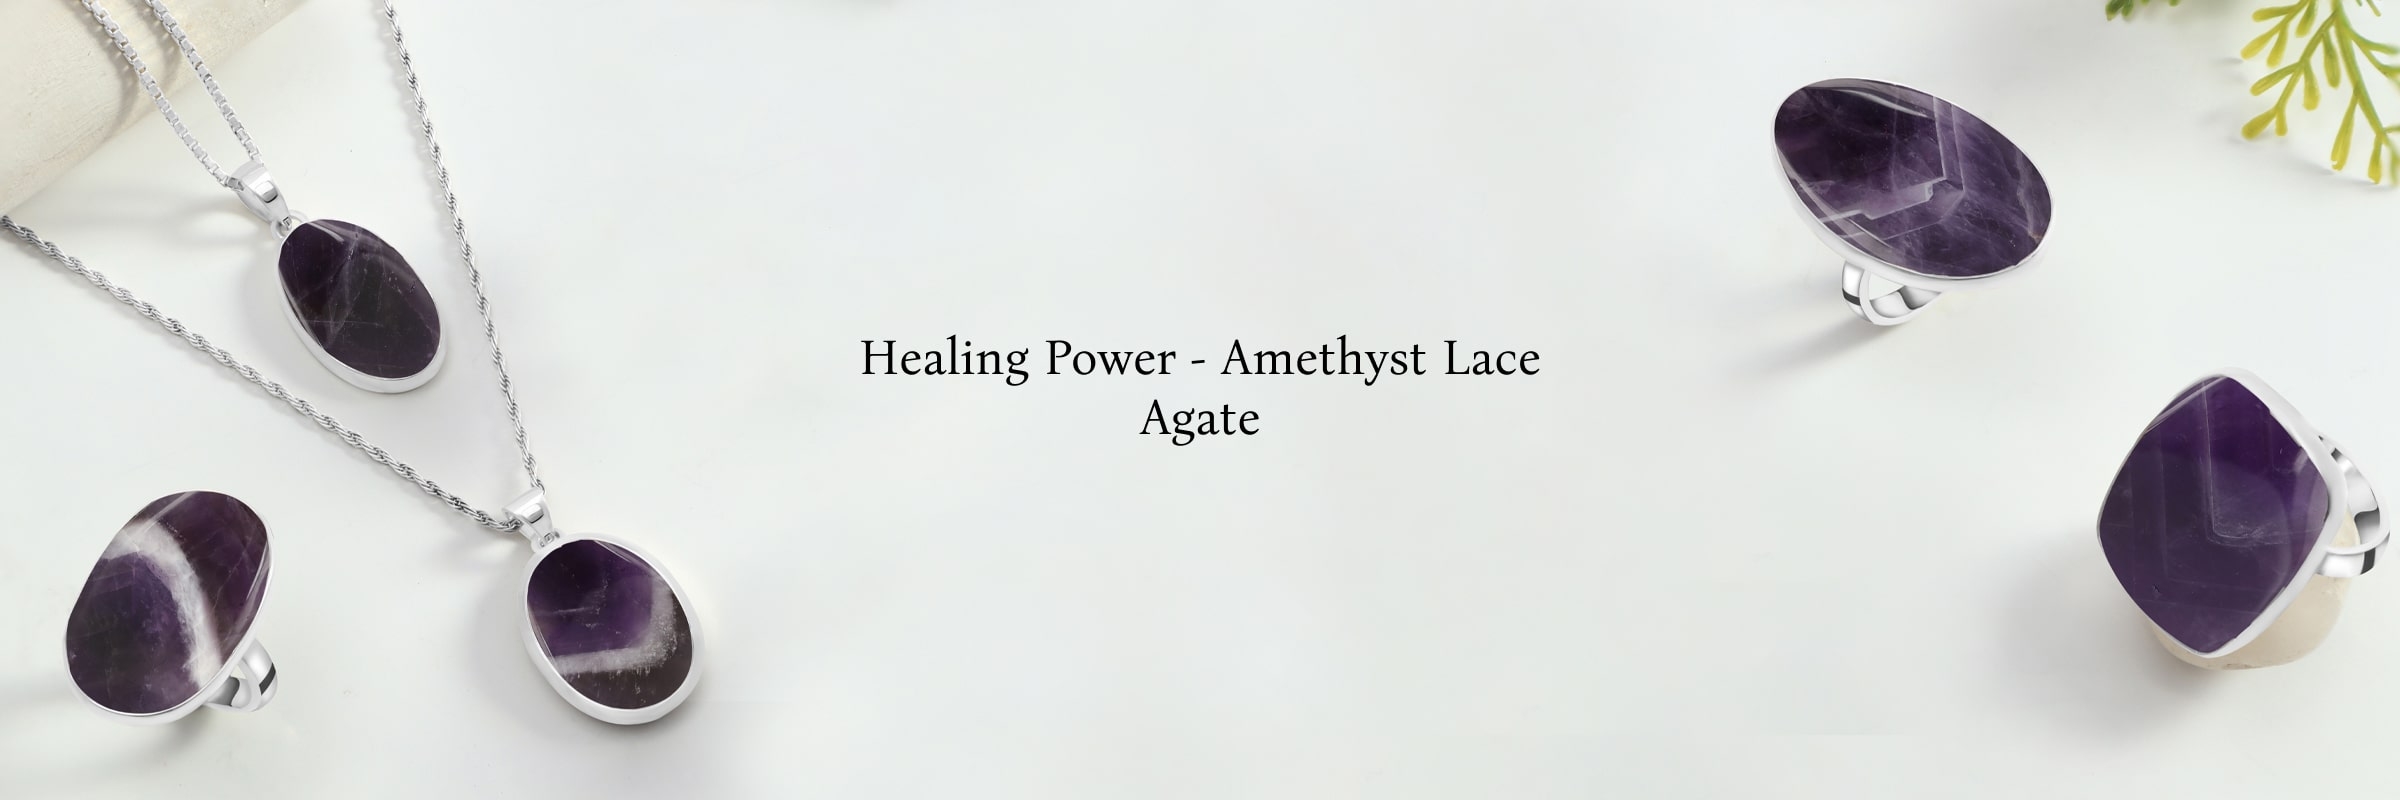 Amethyst Lace Agate Healing Properties